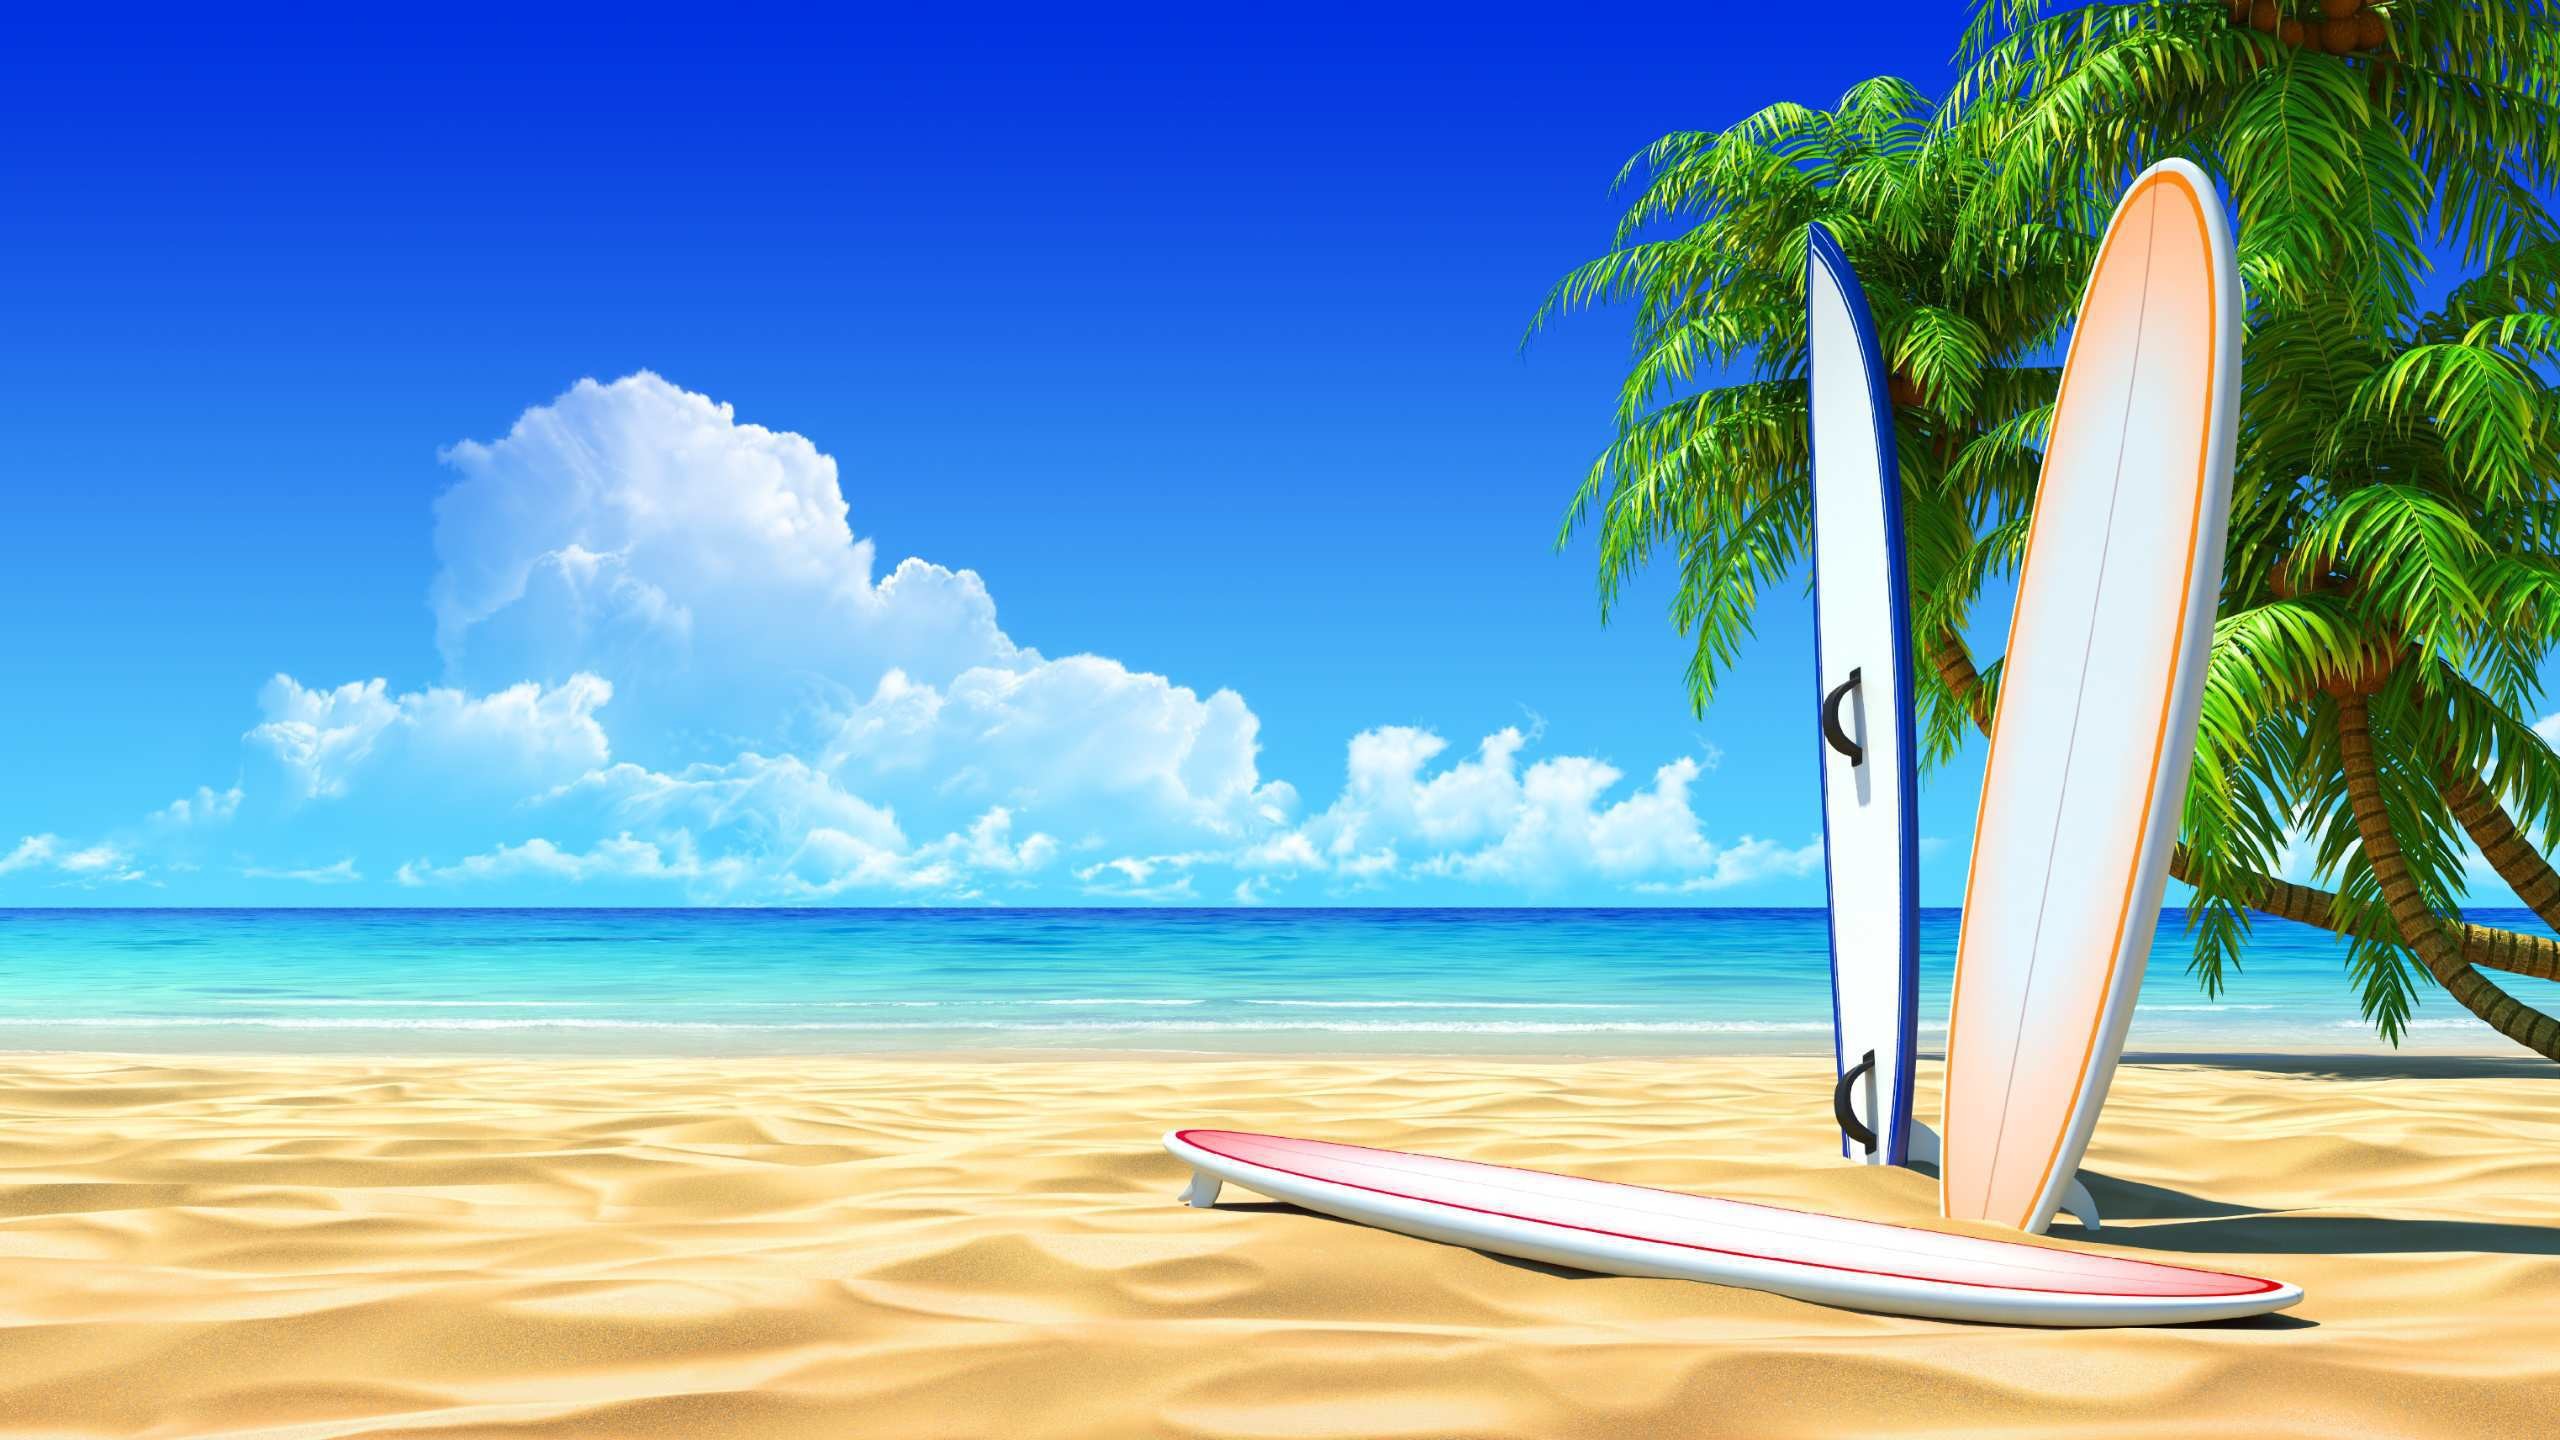 2560x1440 surfing board wallpapers and screensavers | walljpeg.com